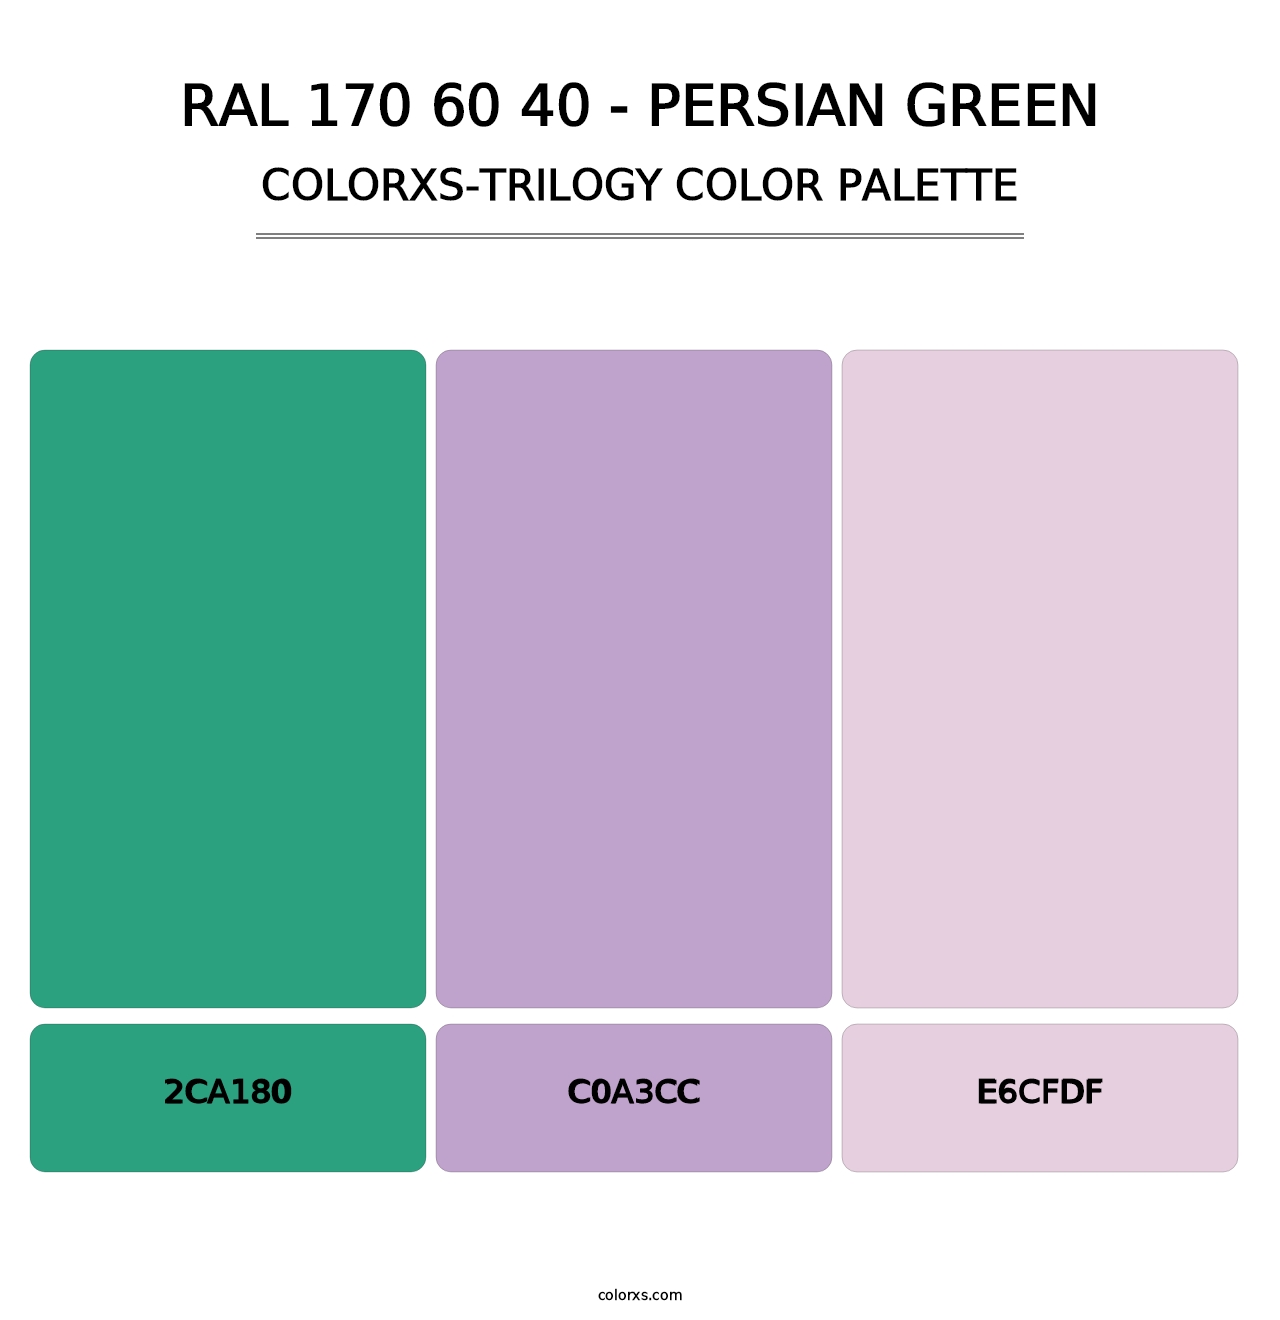 RAL 170 60 40 - Persian Green - Colorxs Trilogy Palette